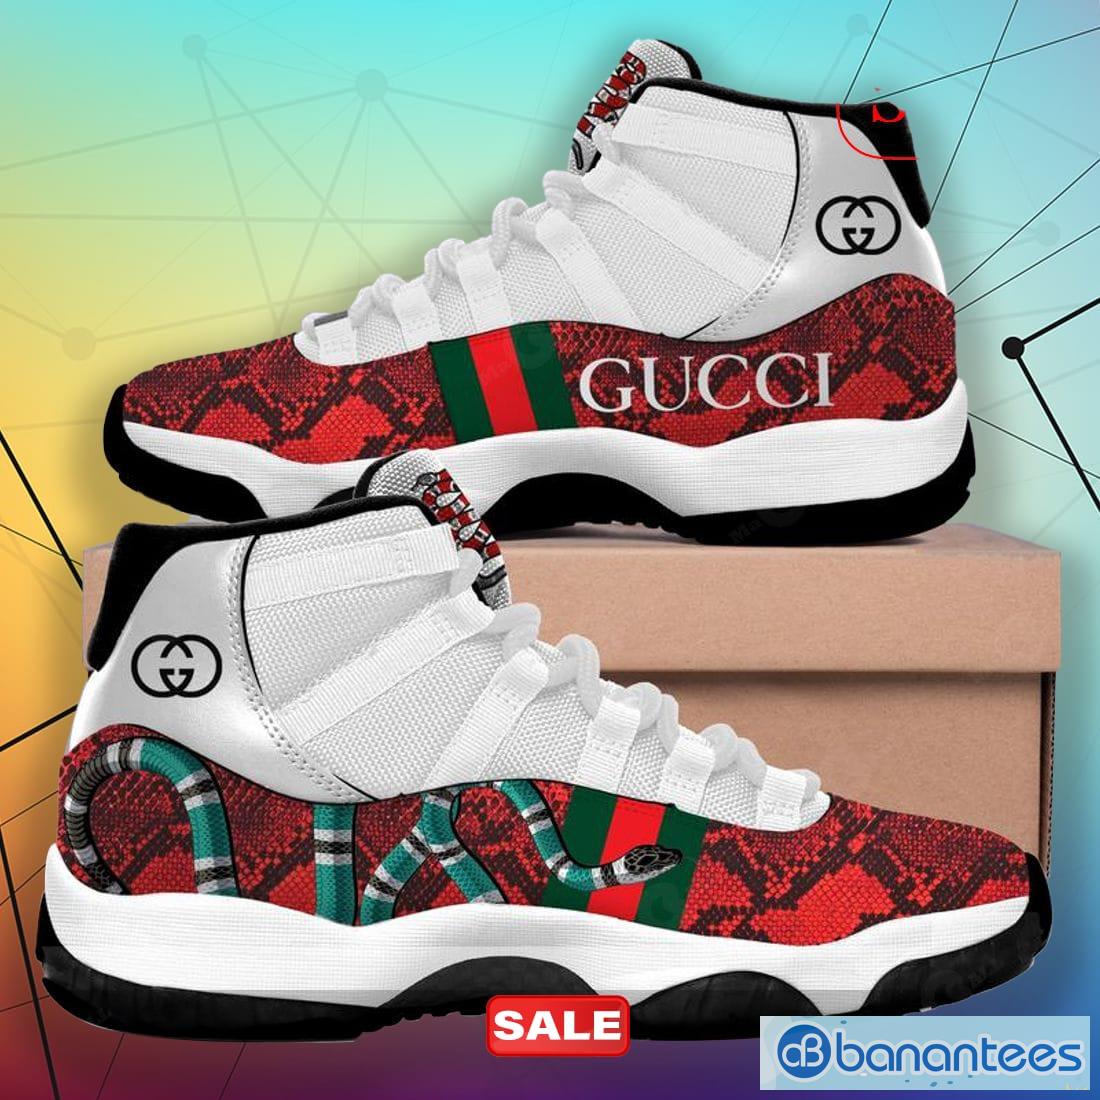 Gucci Brand Snake Jordan 11 Gucci Sneakers Gifts For Men Women Shoes Design -